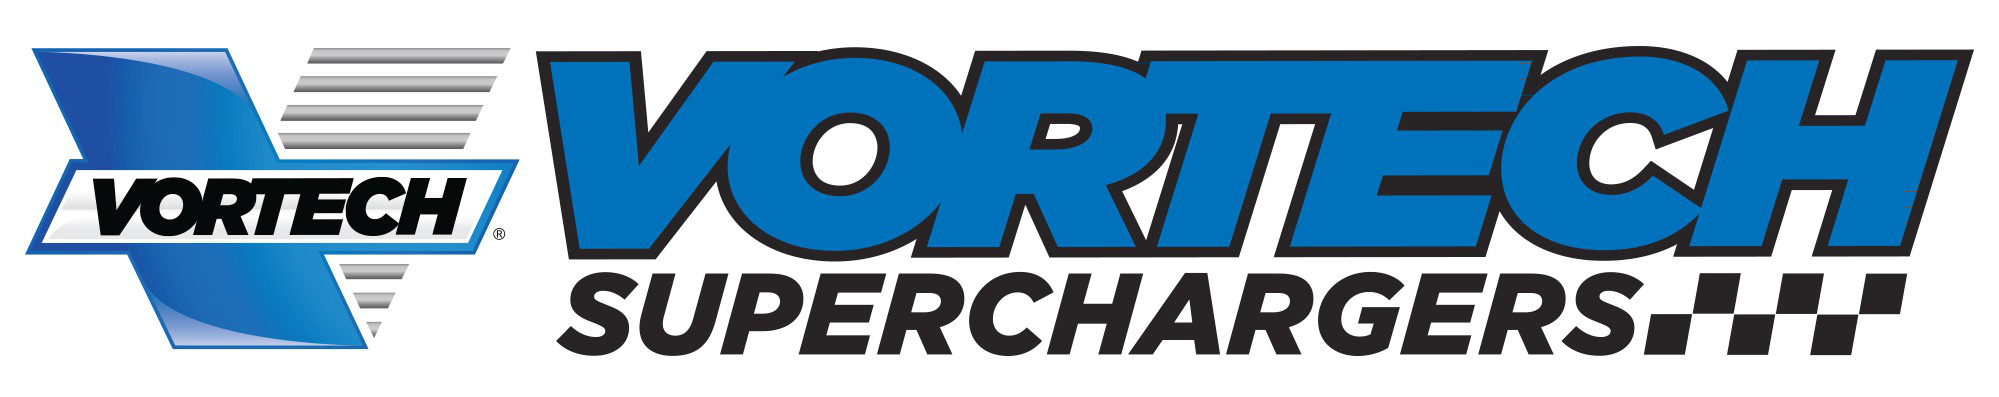 Vortech V-3 Heritage Series Supercharger - Automotive Videos